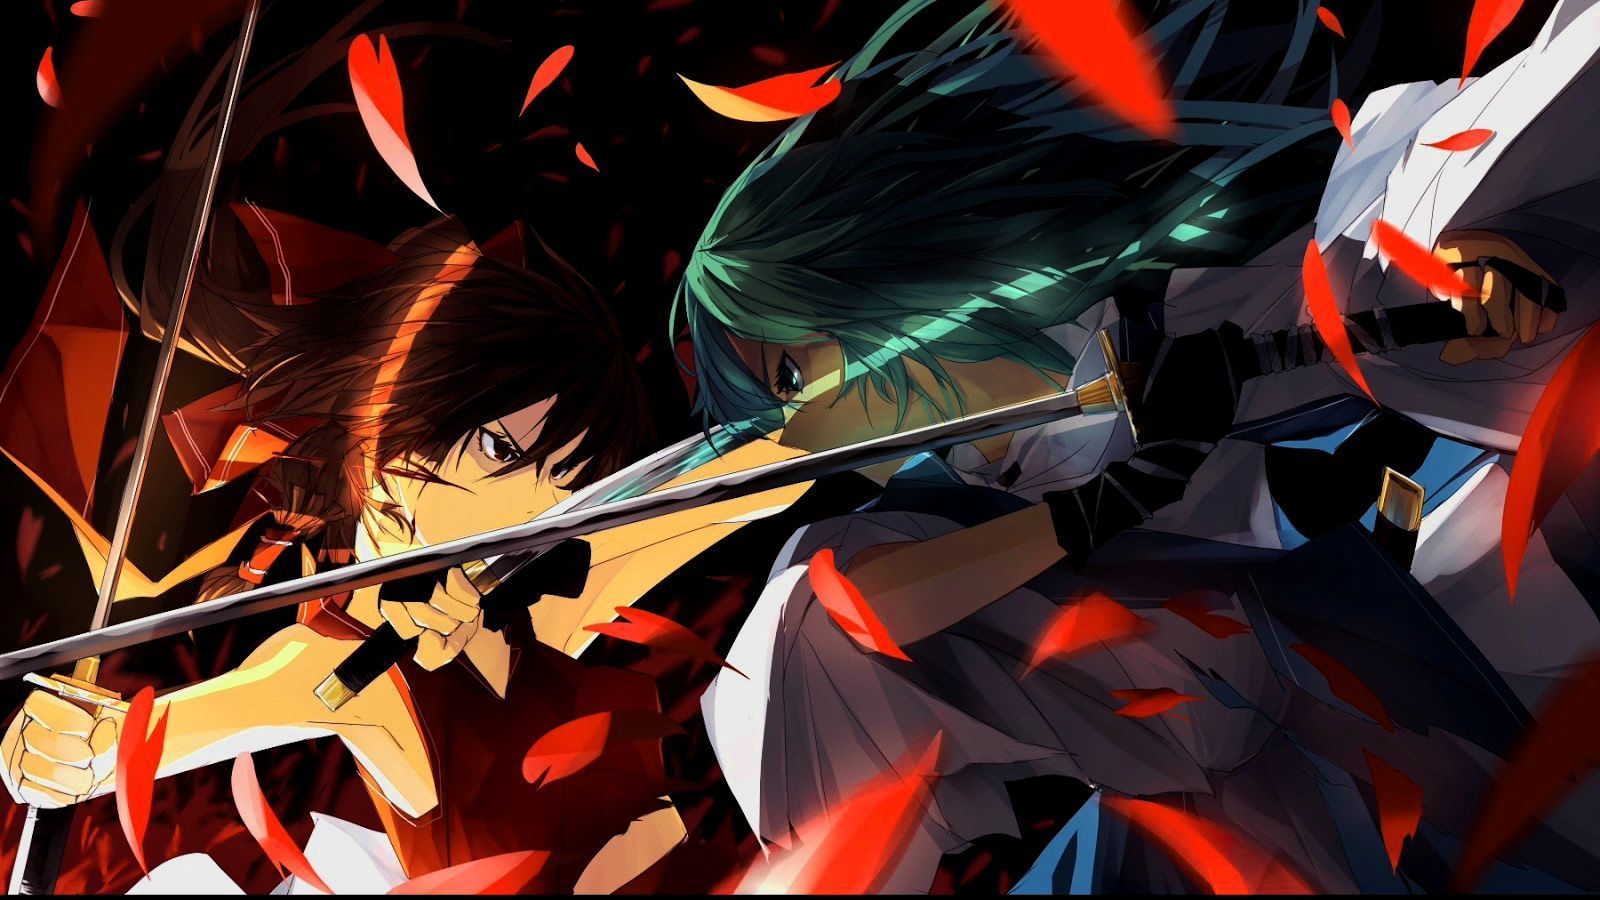 Anime Sword Wallpaper Free Anime Sword Background